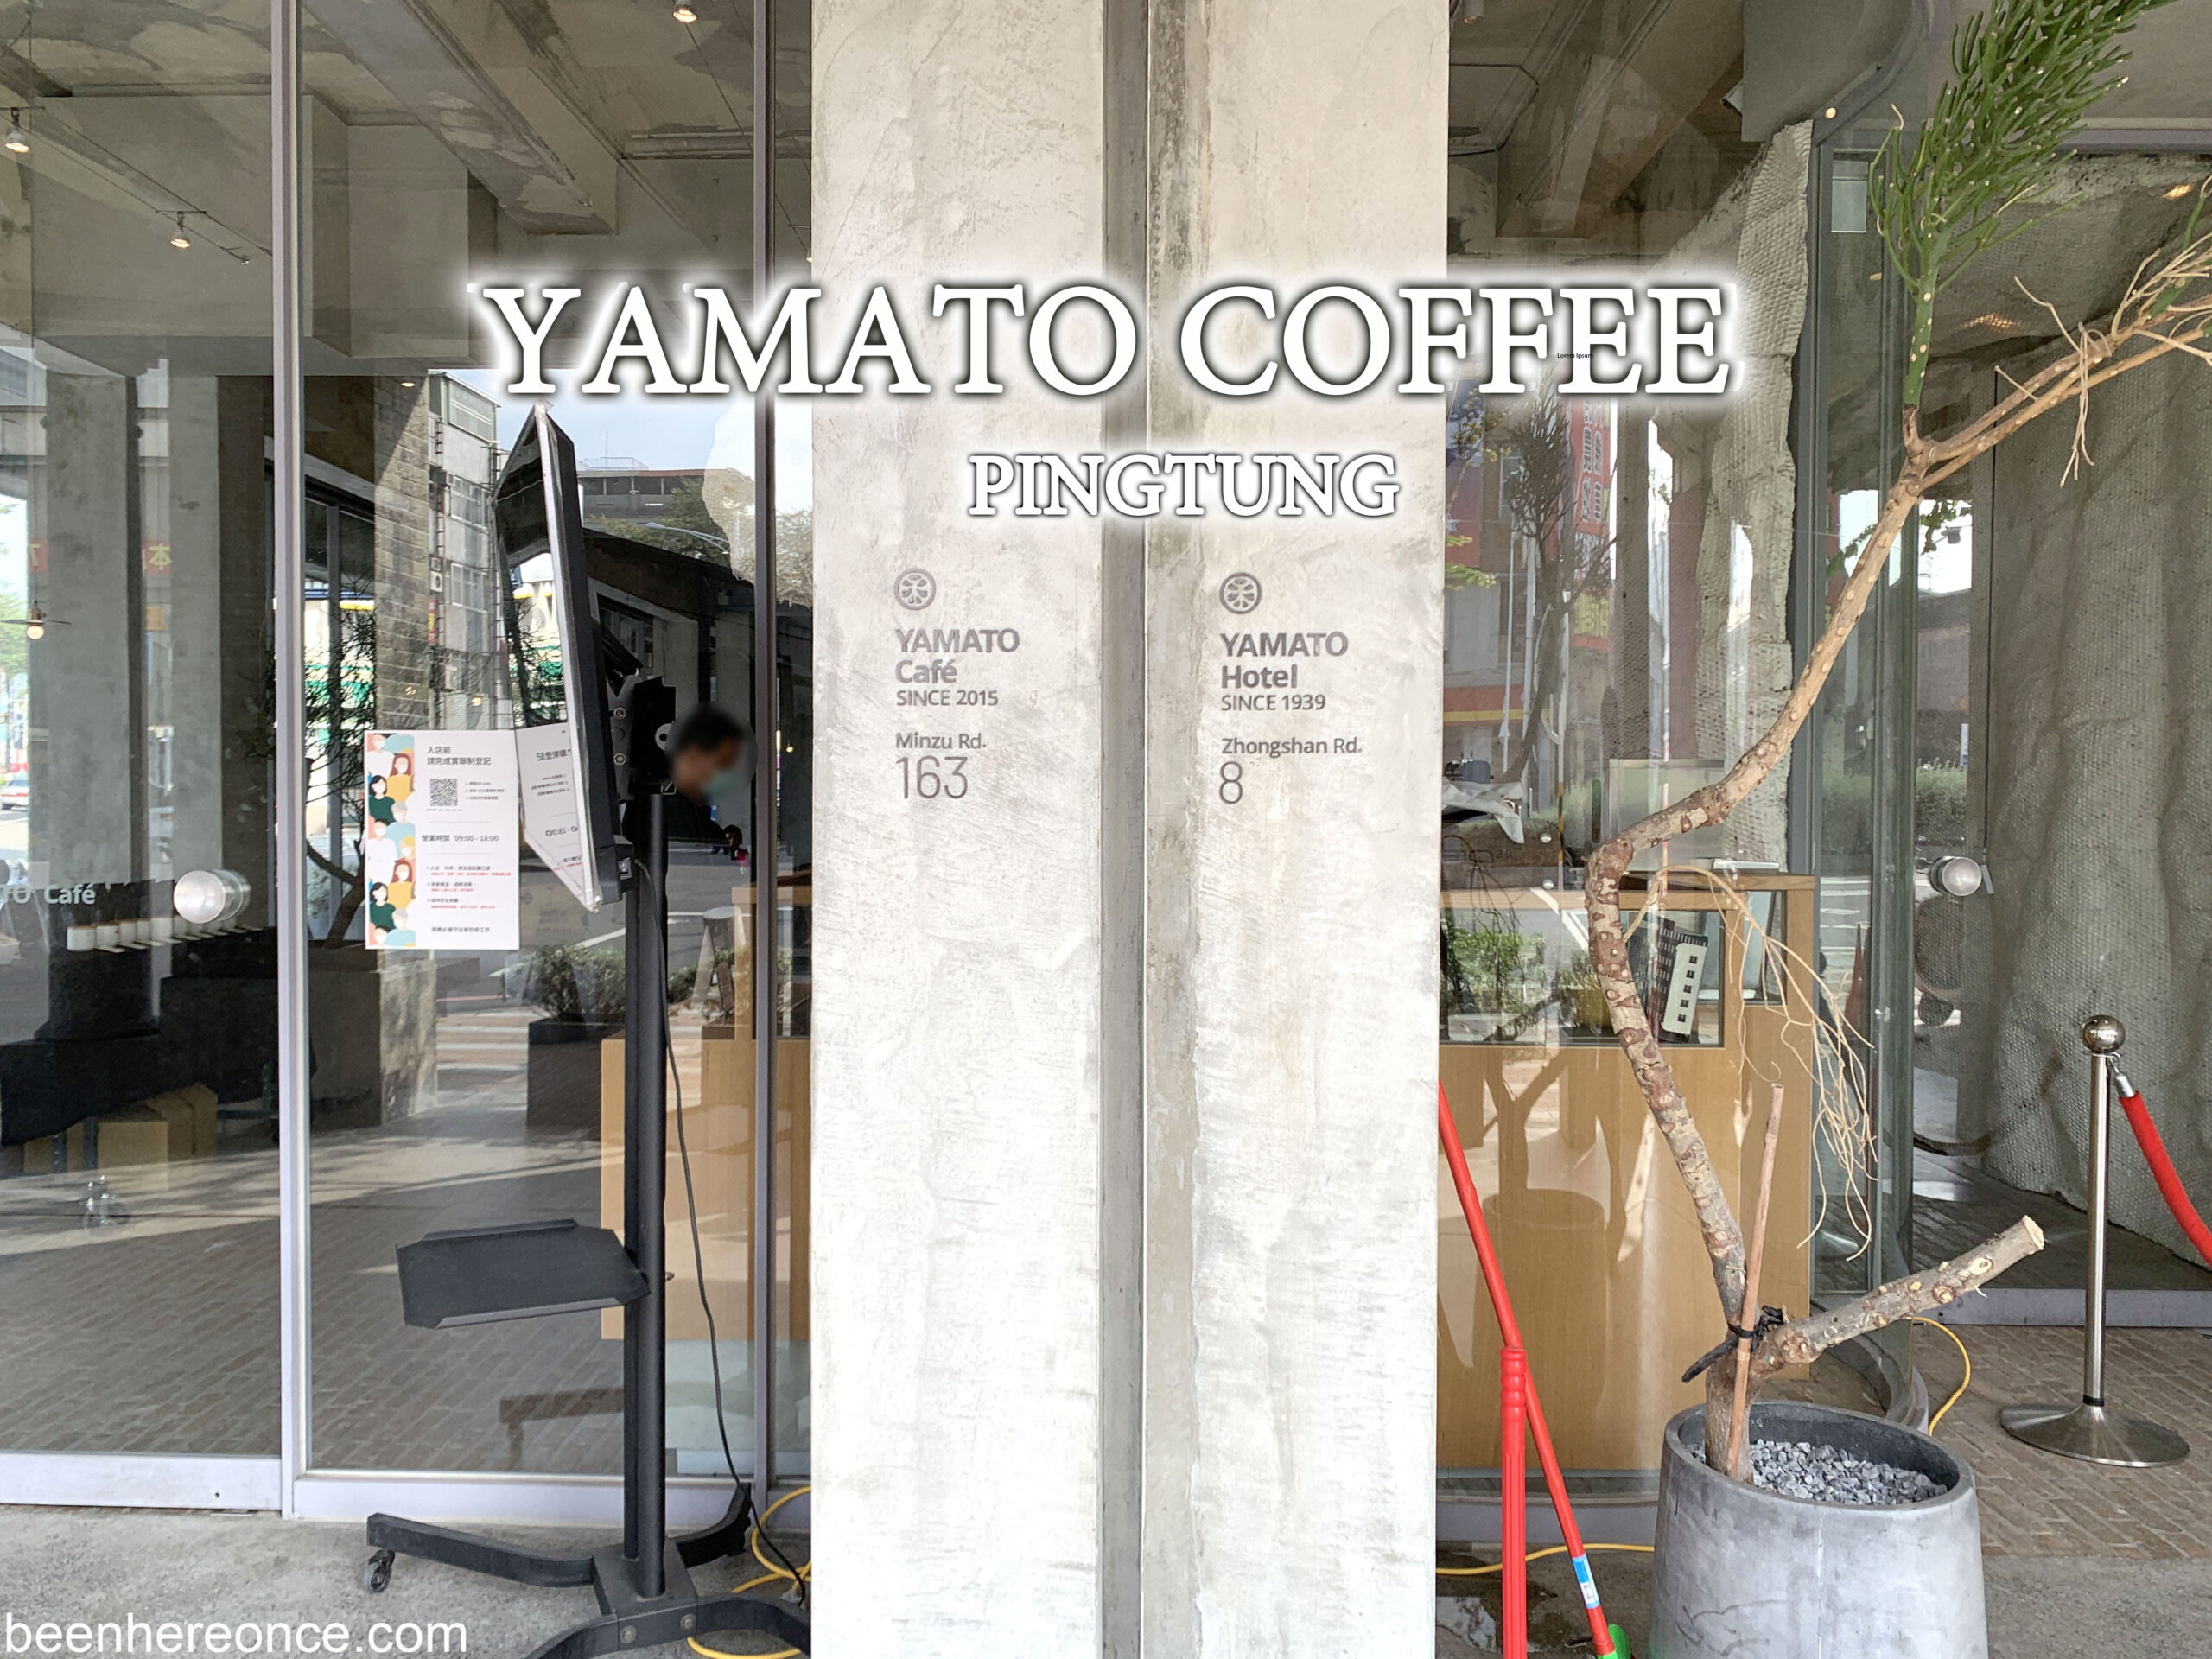 Yamato Coffee, Pingtung Station Coffee Shop